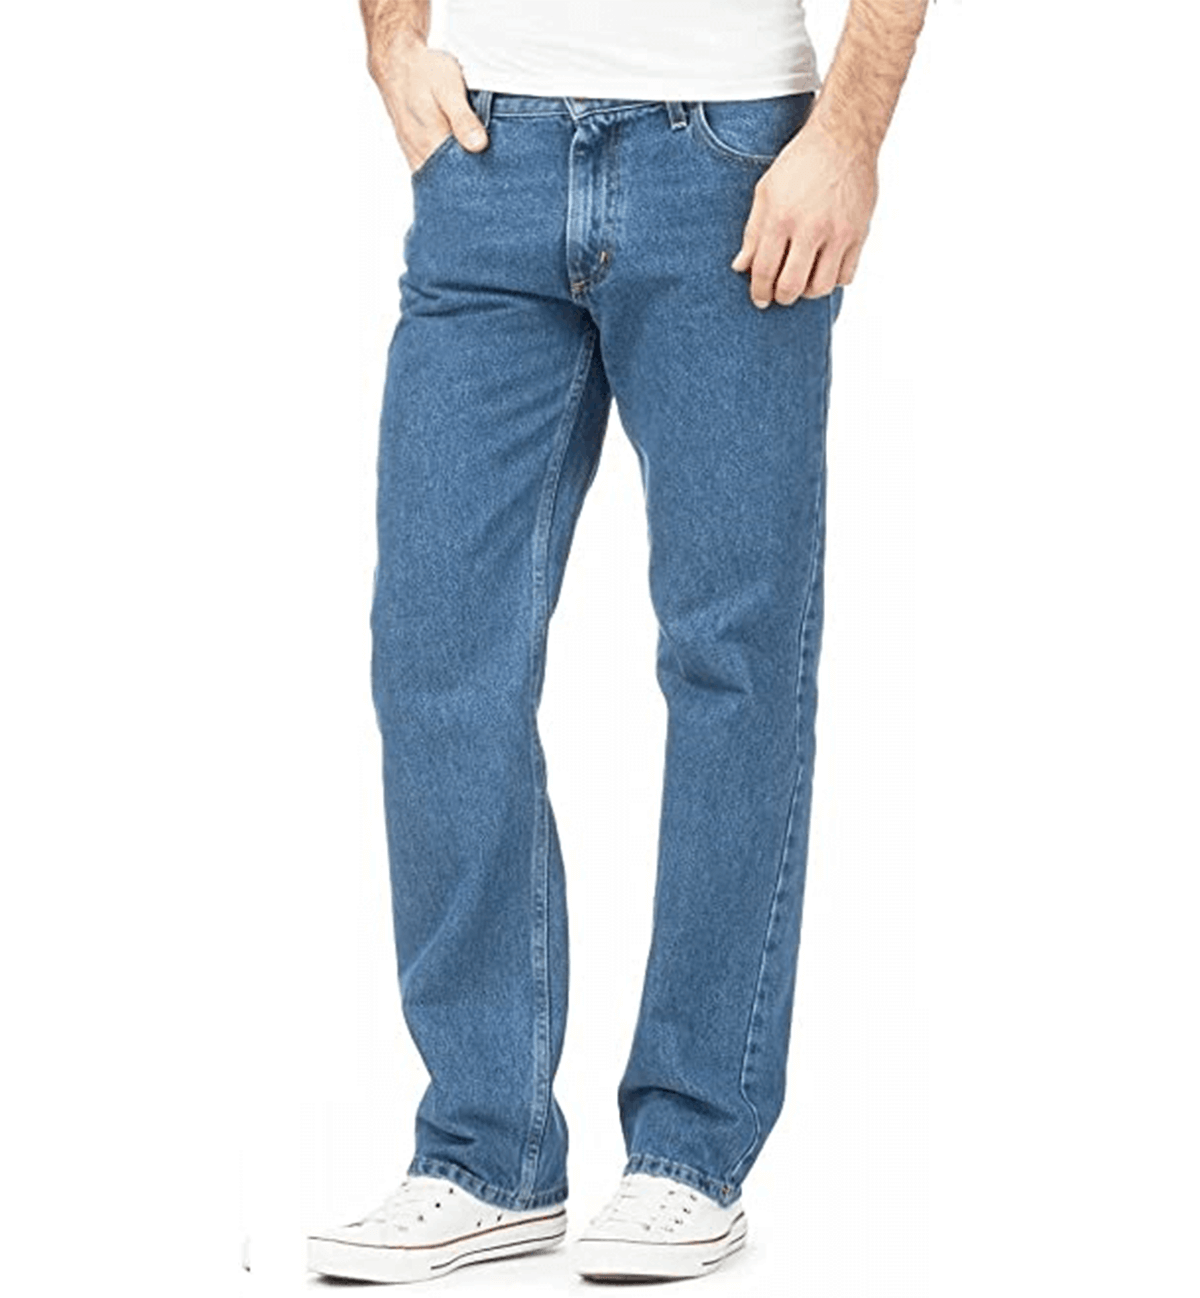 Modaleo Mens Jeans Denim Pants Light Blue - Modaleo Collection